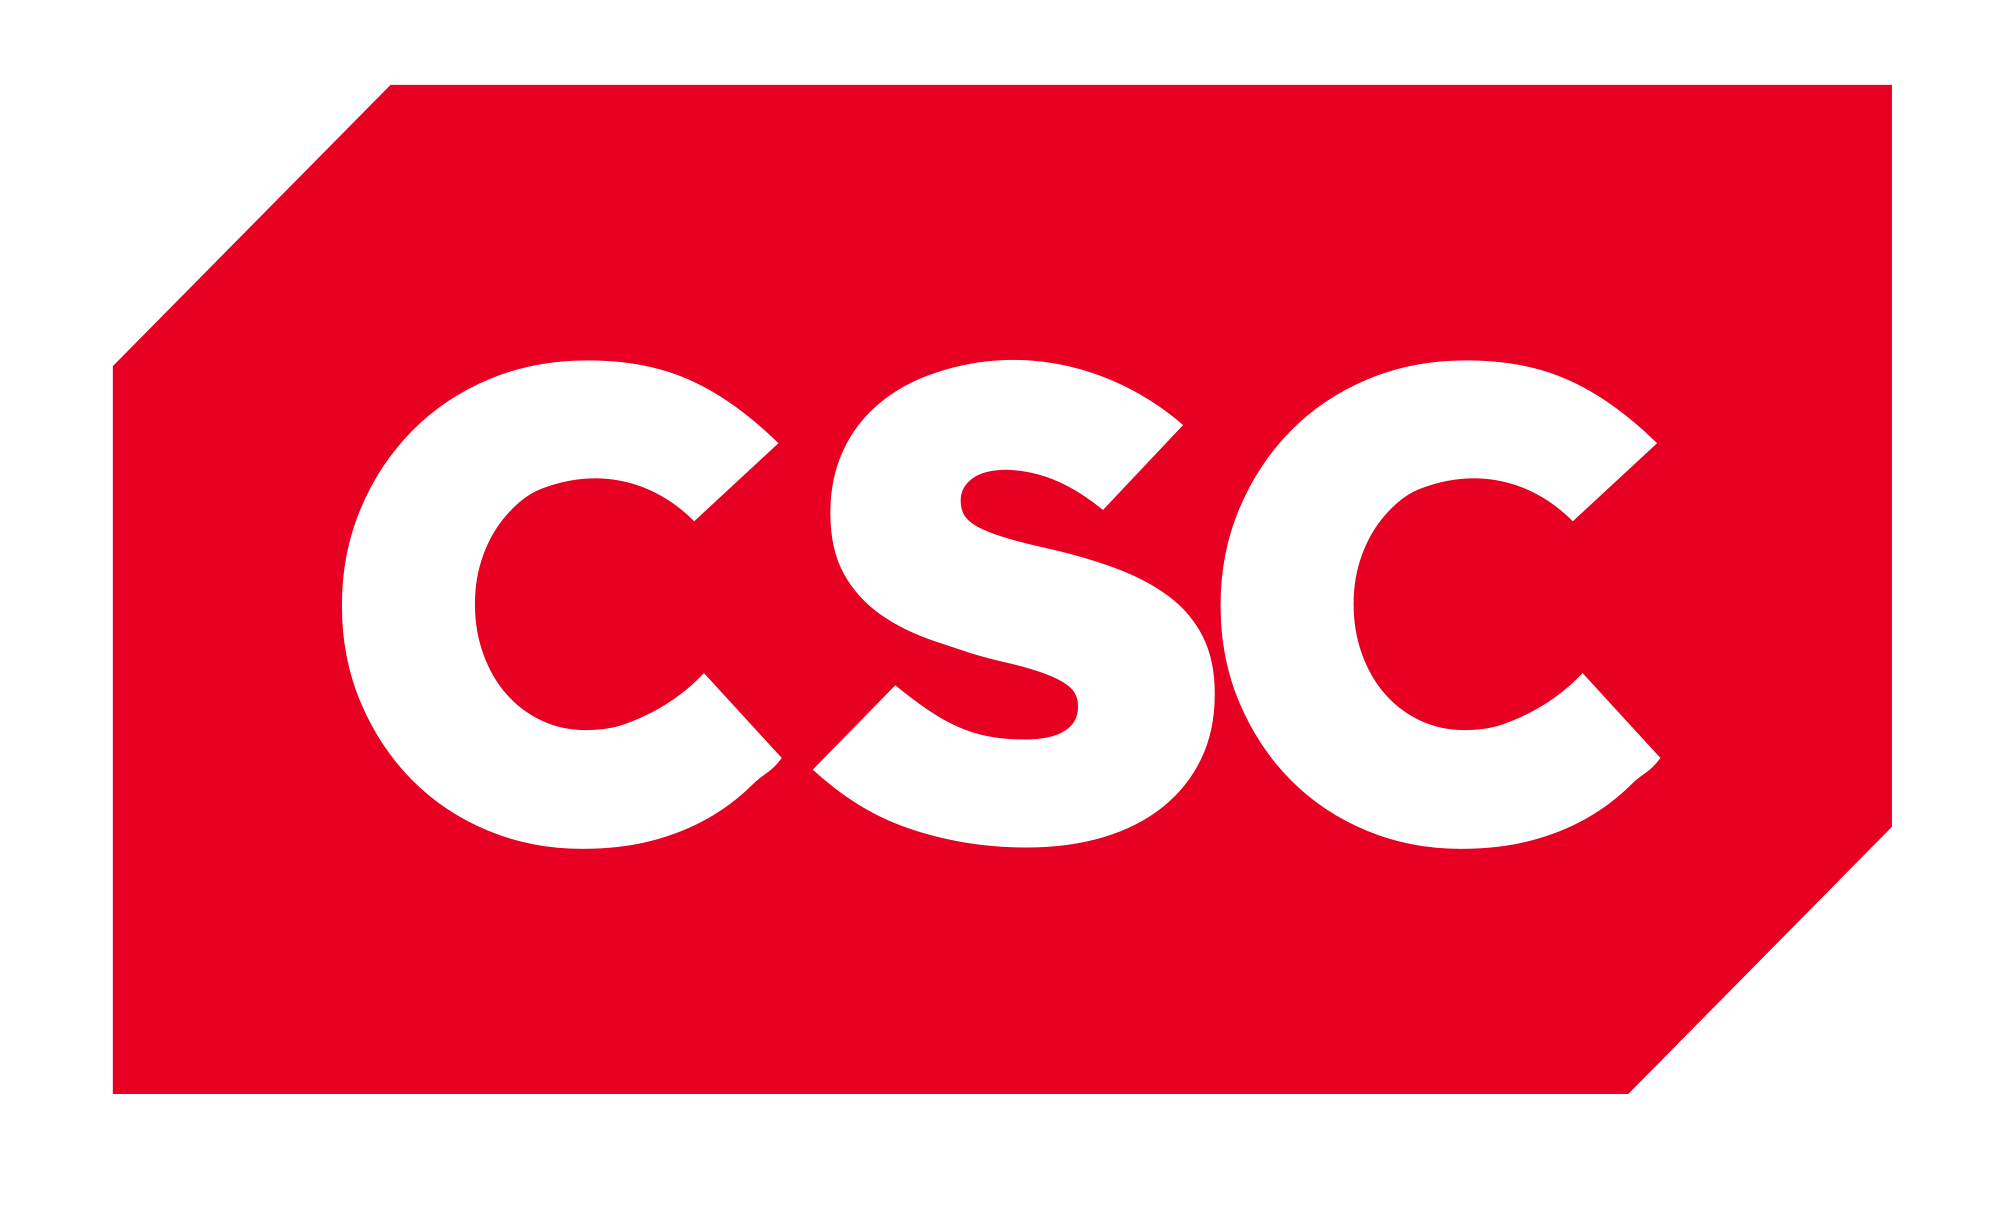 Red Computer Logo - CSC Logo.svg